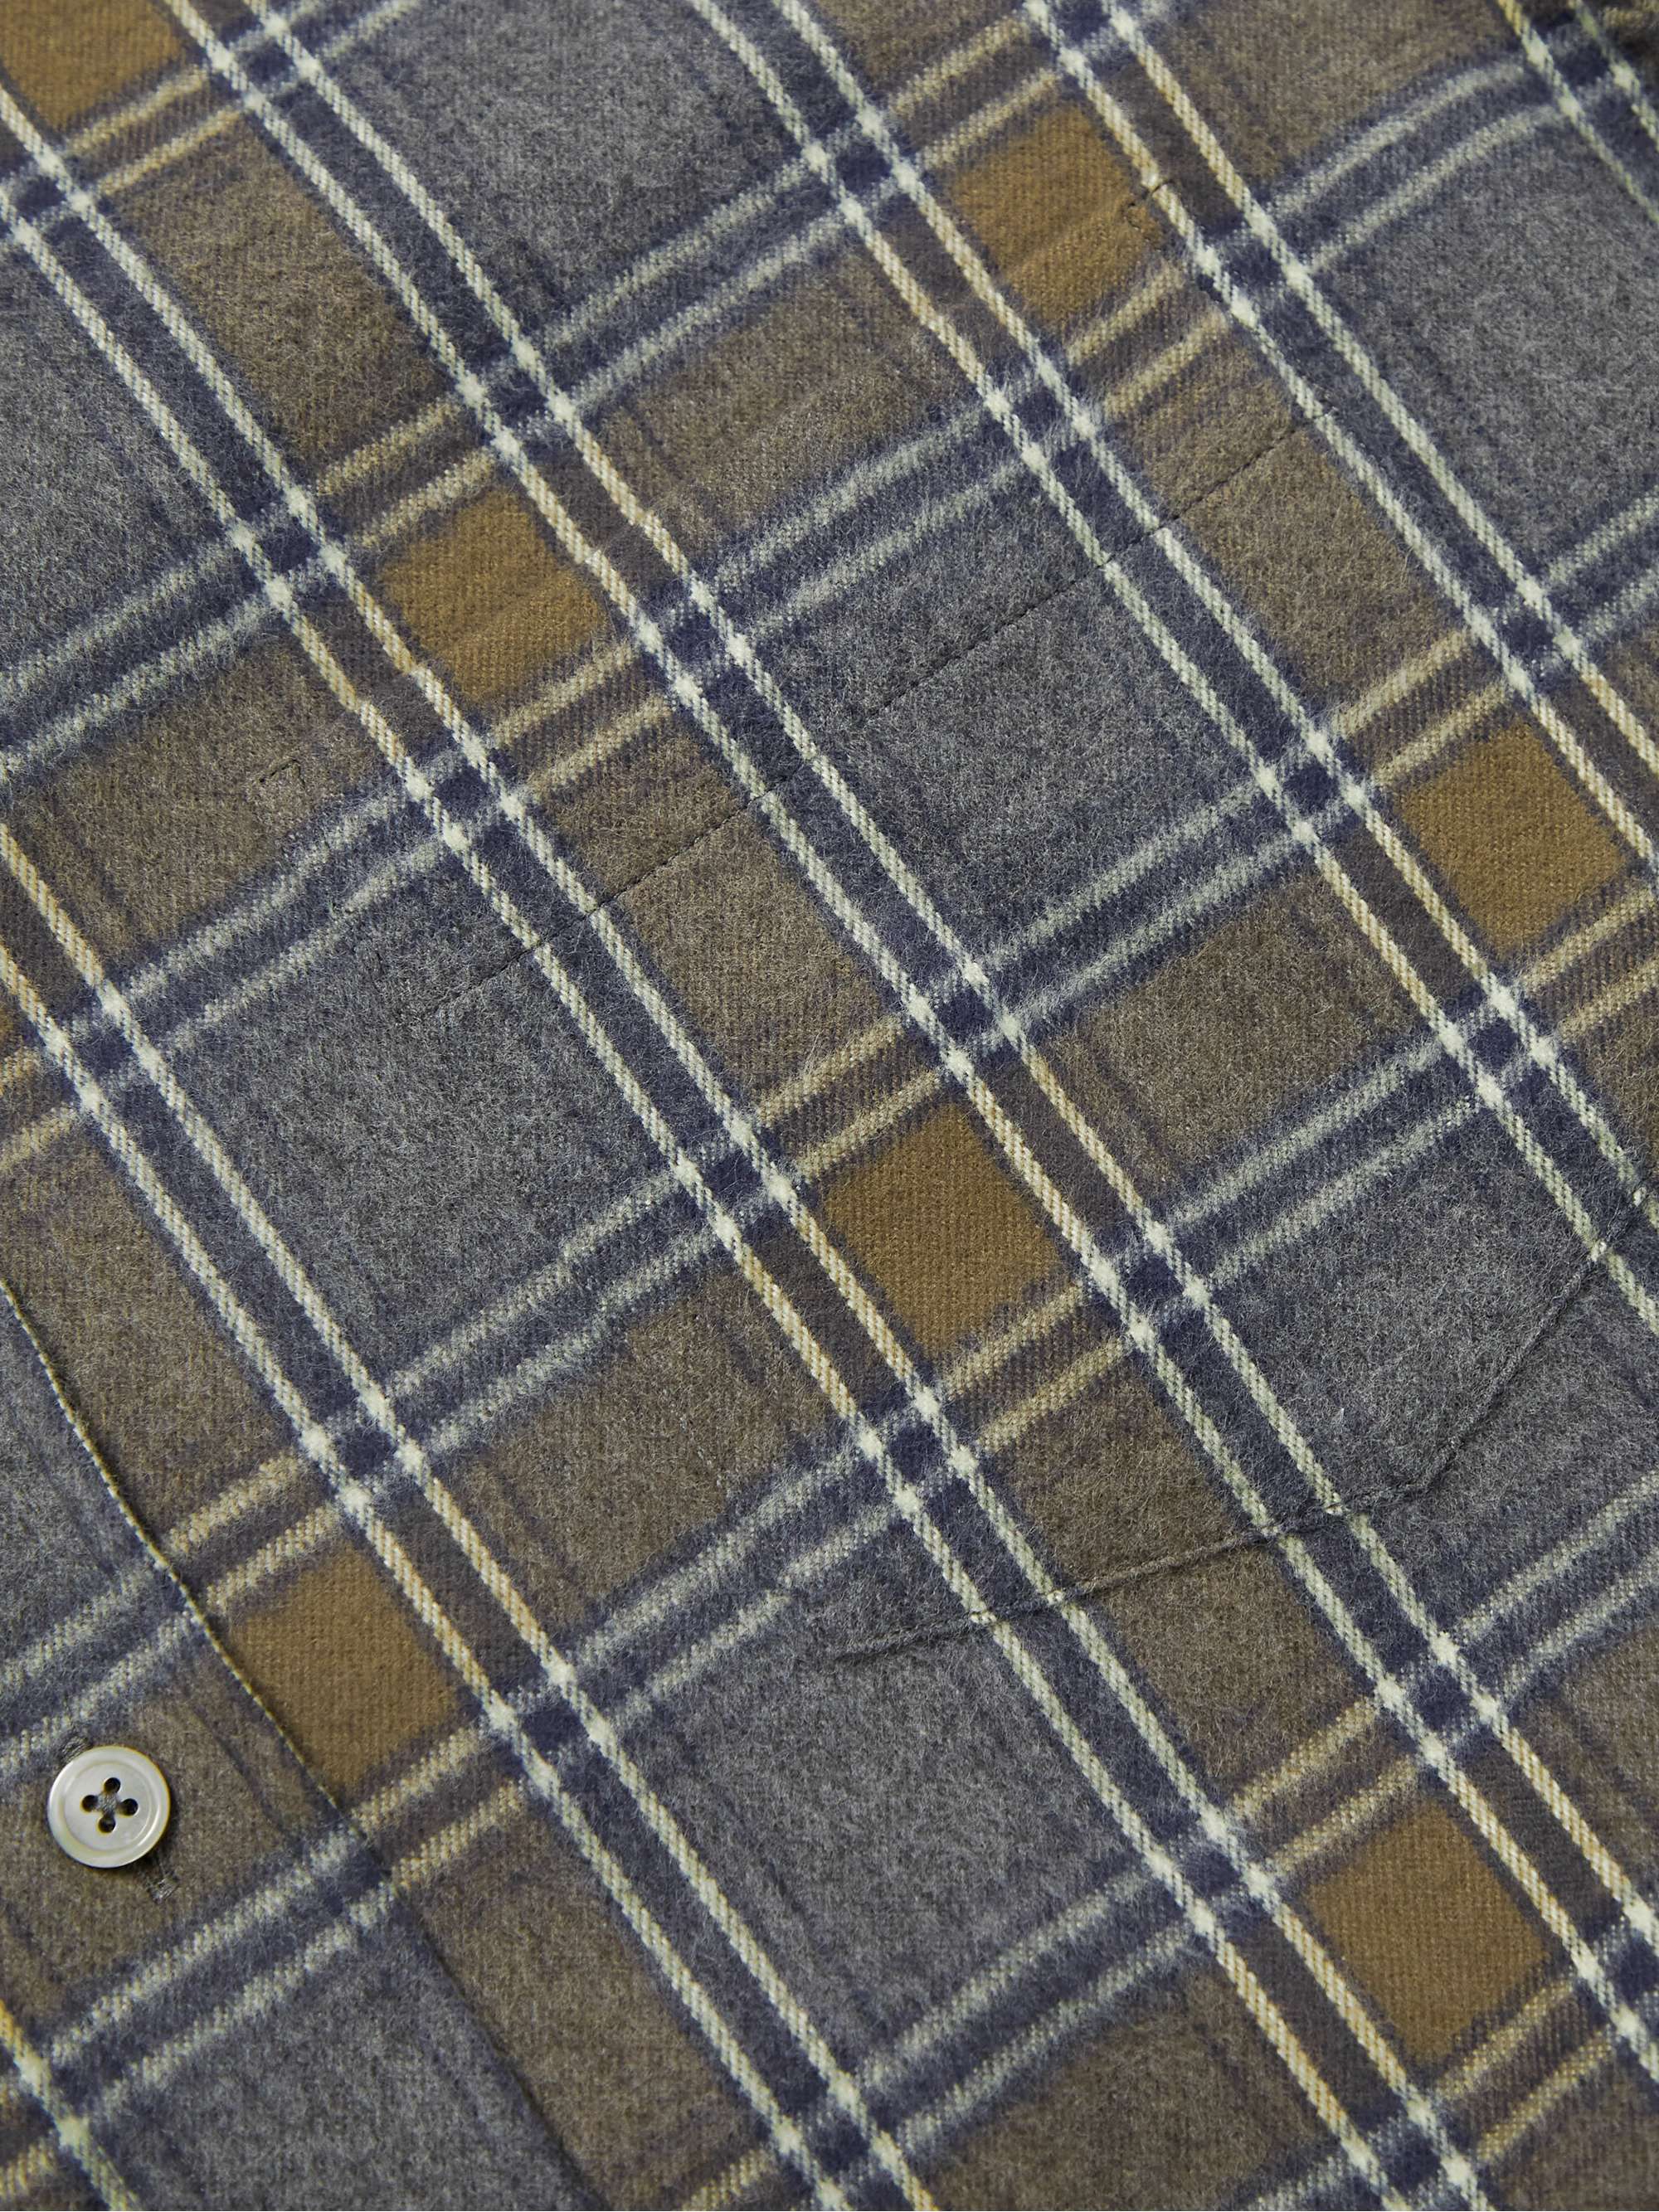 DE BONNE FACTURE Button-Down Collar Checked Brushed Cotton-Flannel Shirt